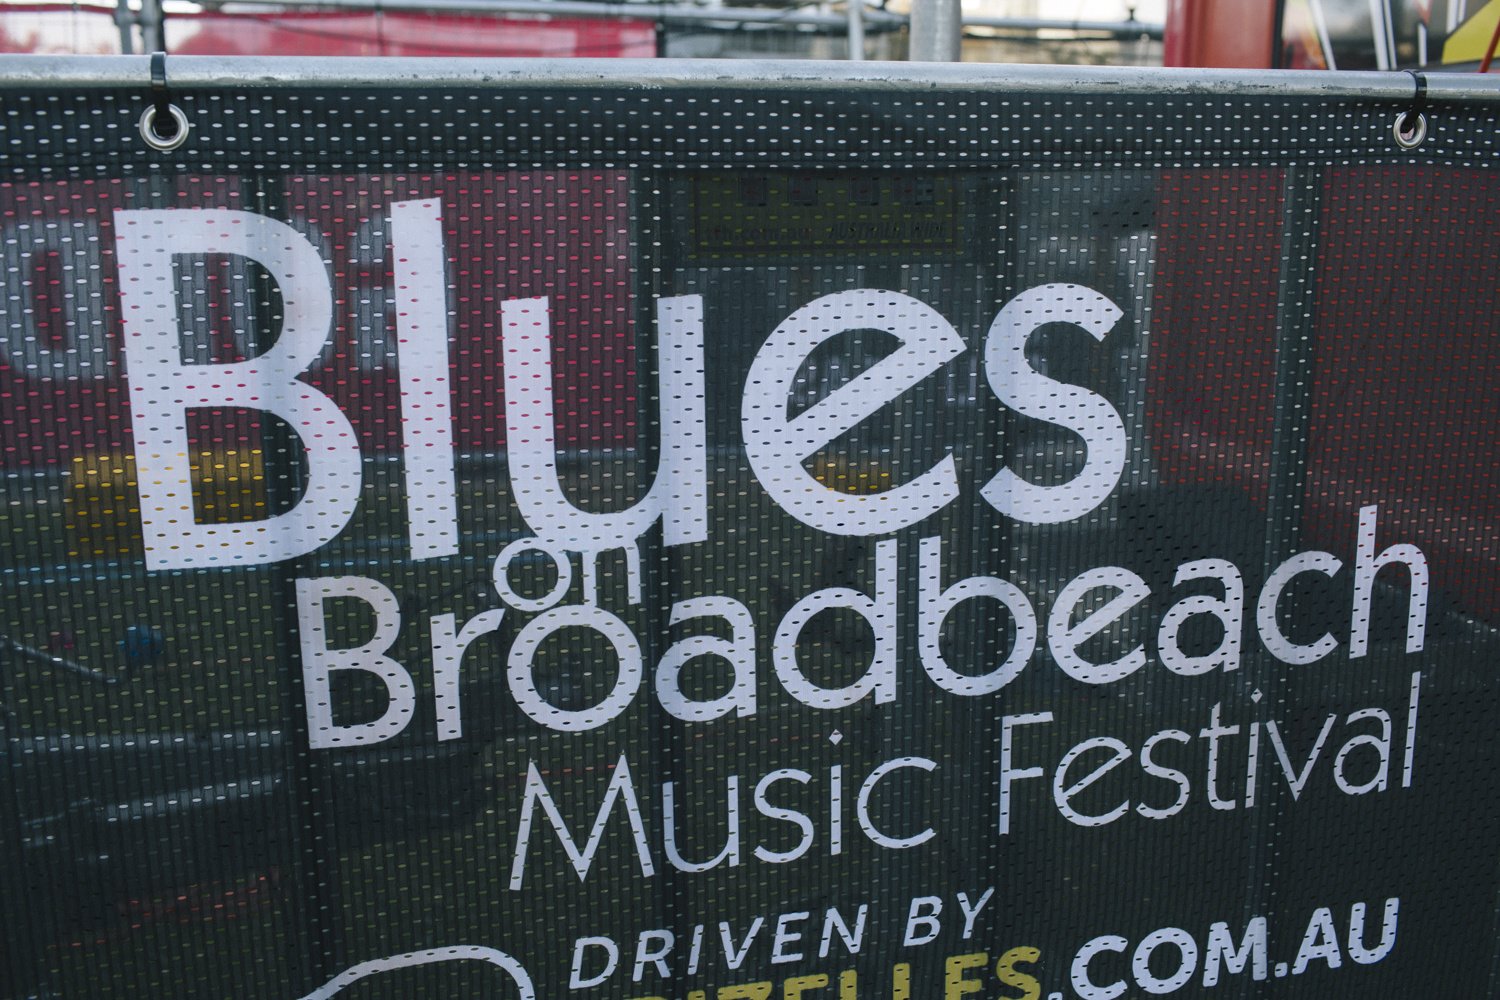 Blues On Broadbeach